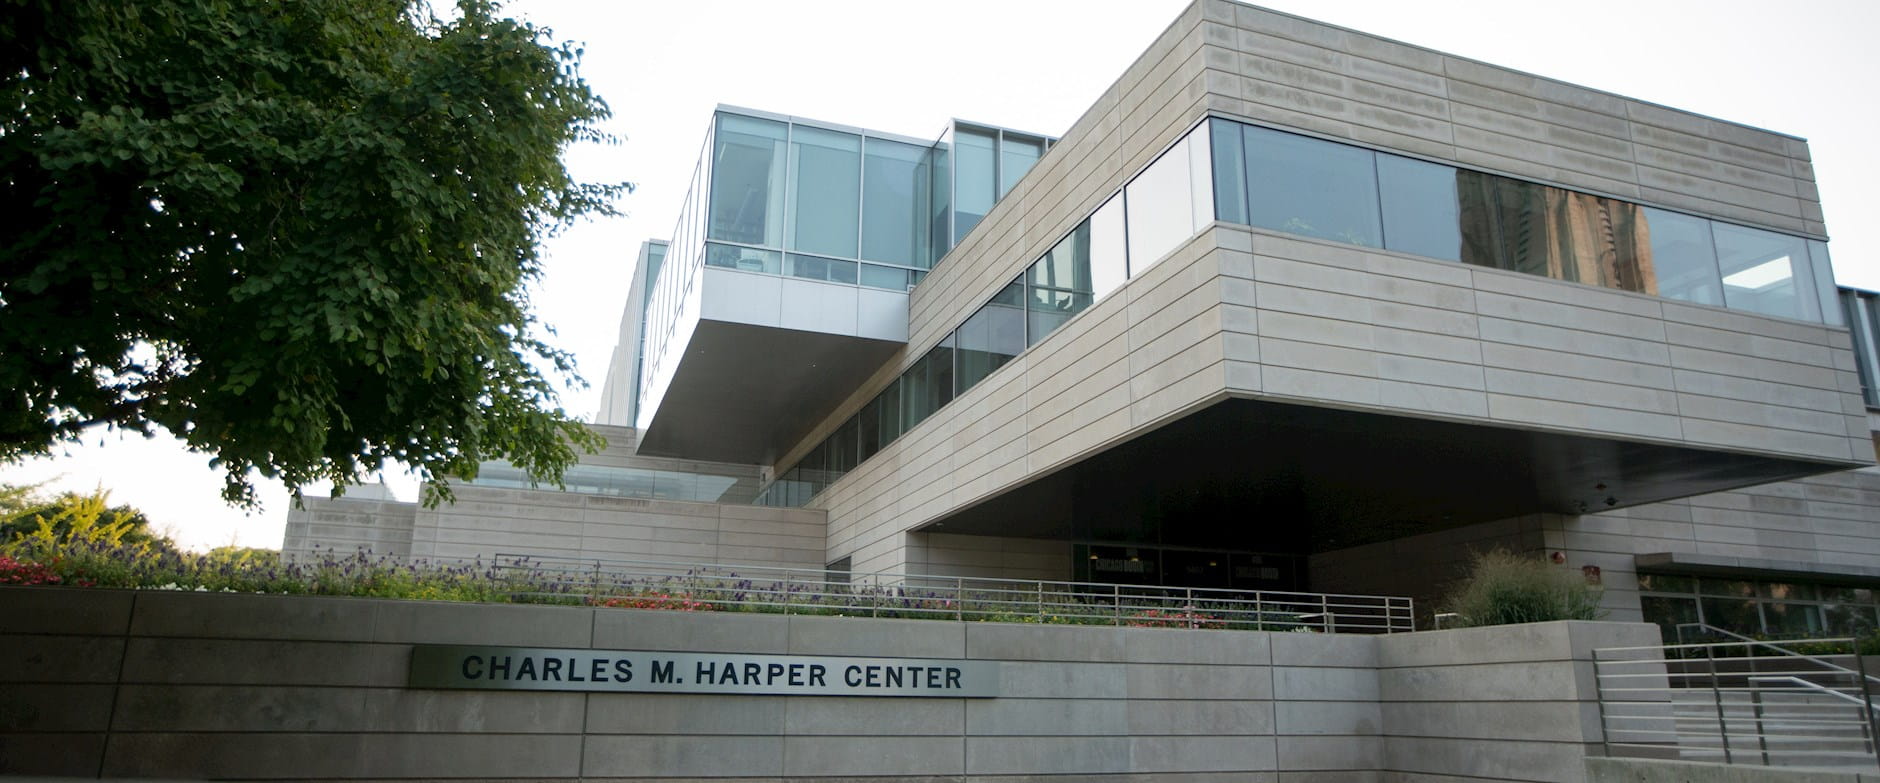 Harper Center sign on Woodlawn